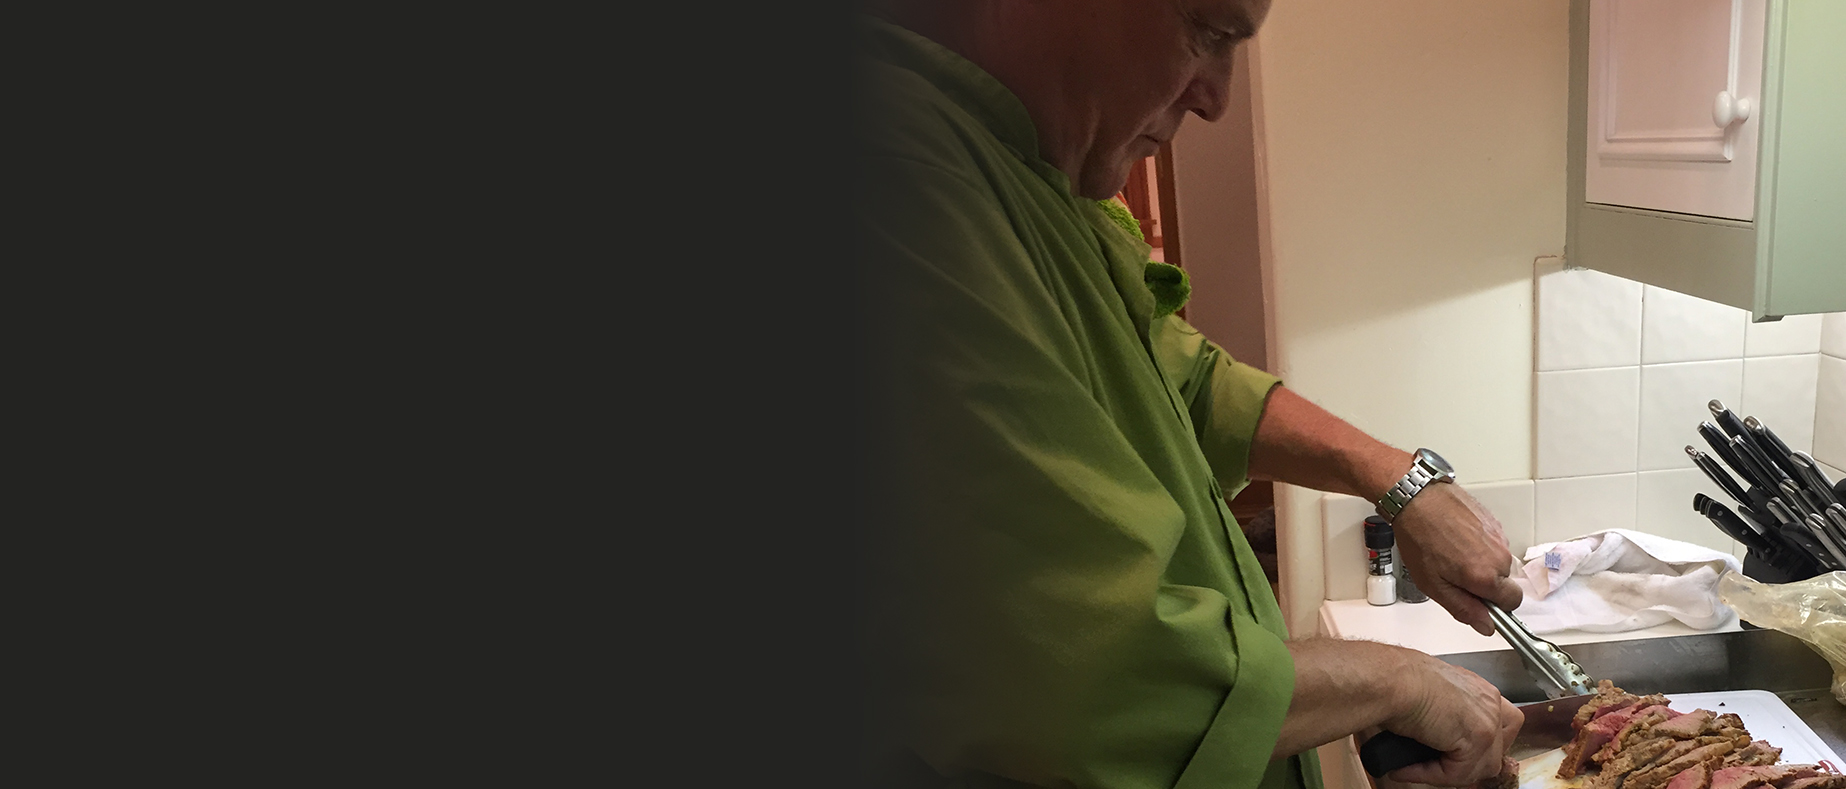 A man in green shirt looking at his phone.